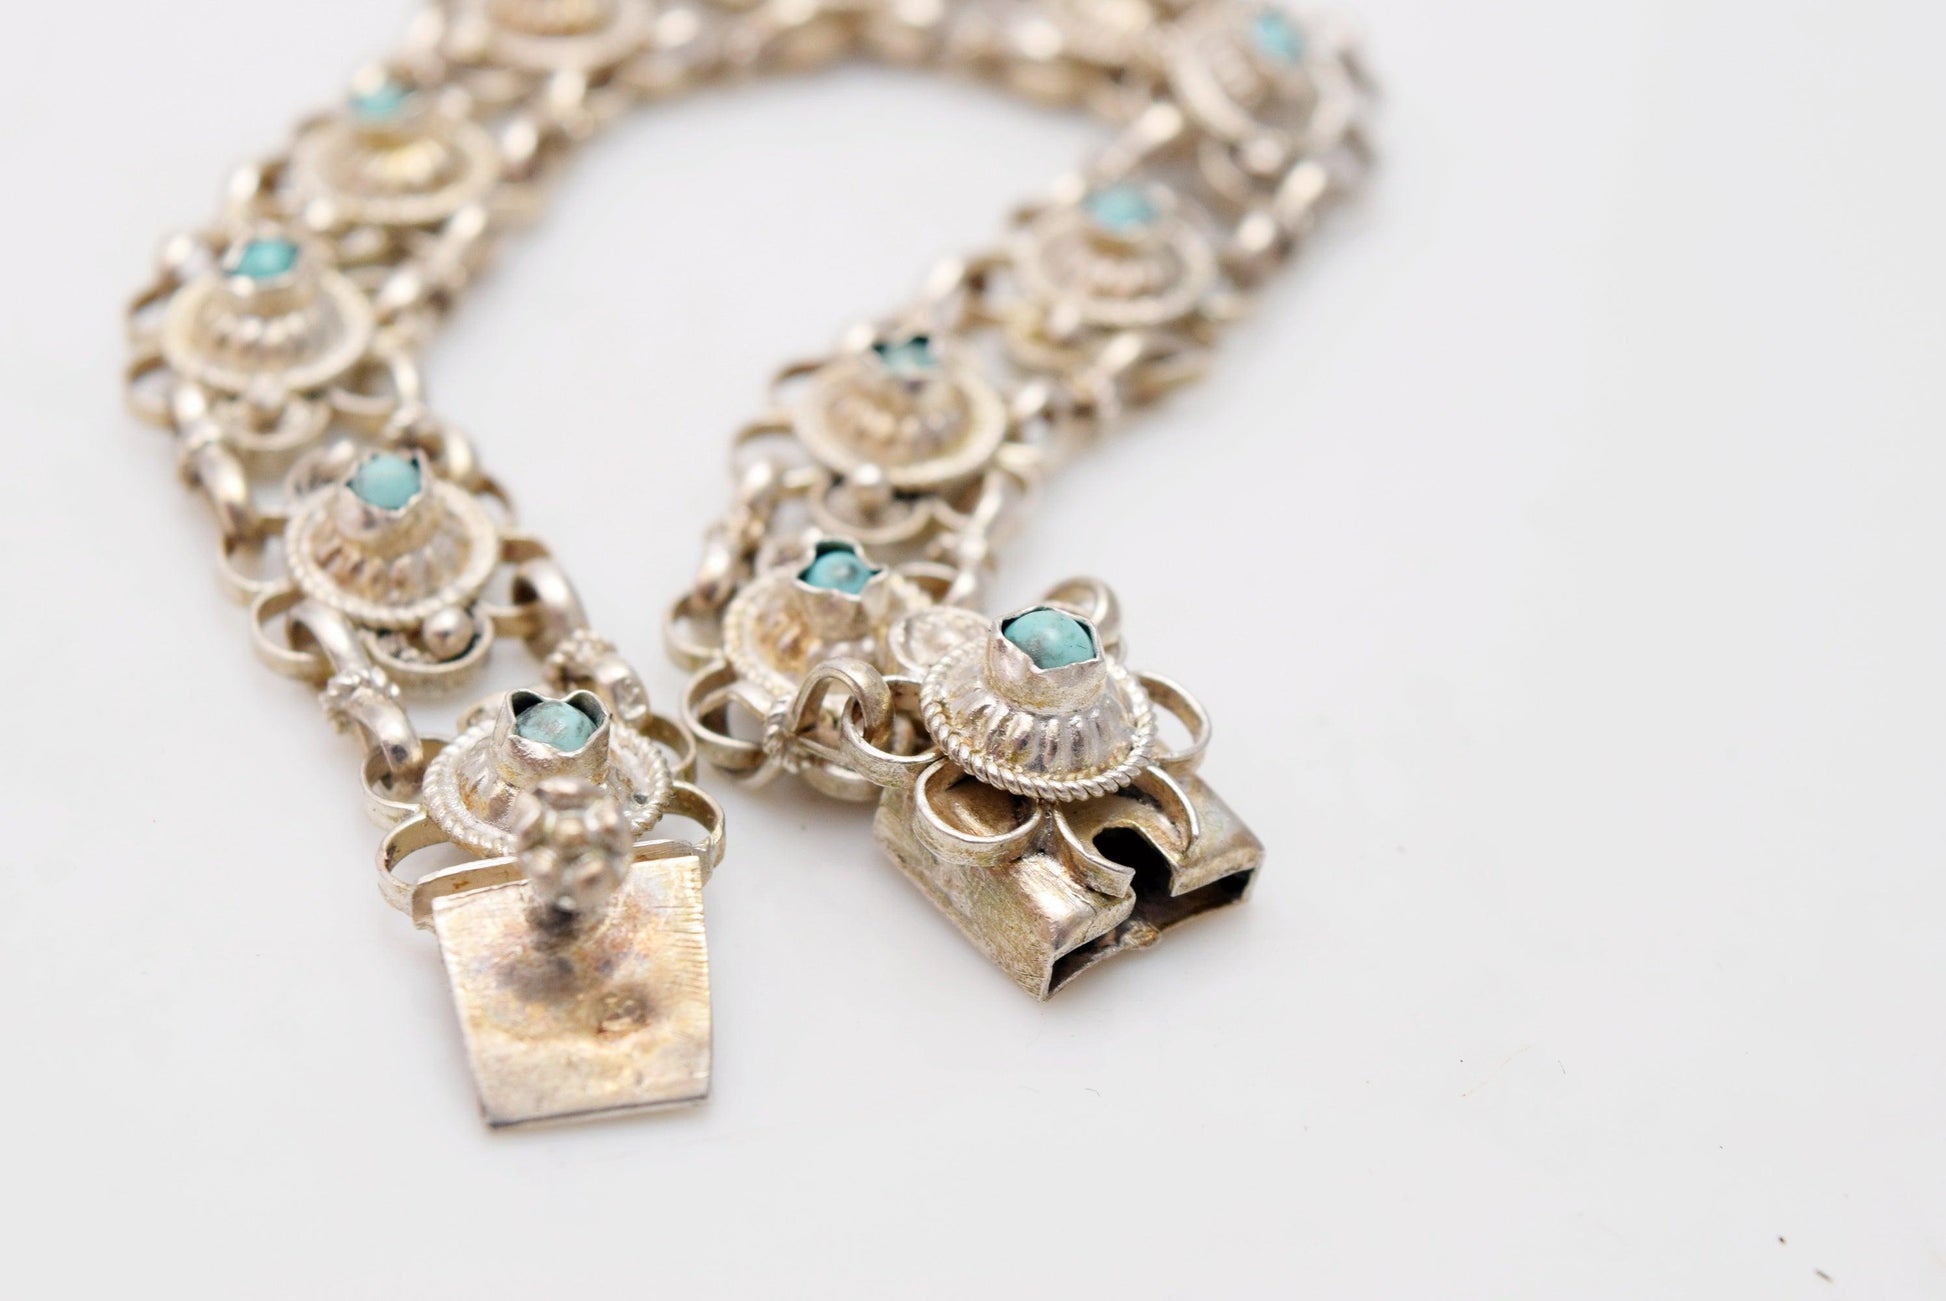 Vintage Egyptian silver and turquoise Link Bracelet - Anteeka